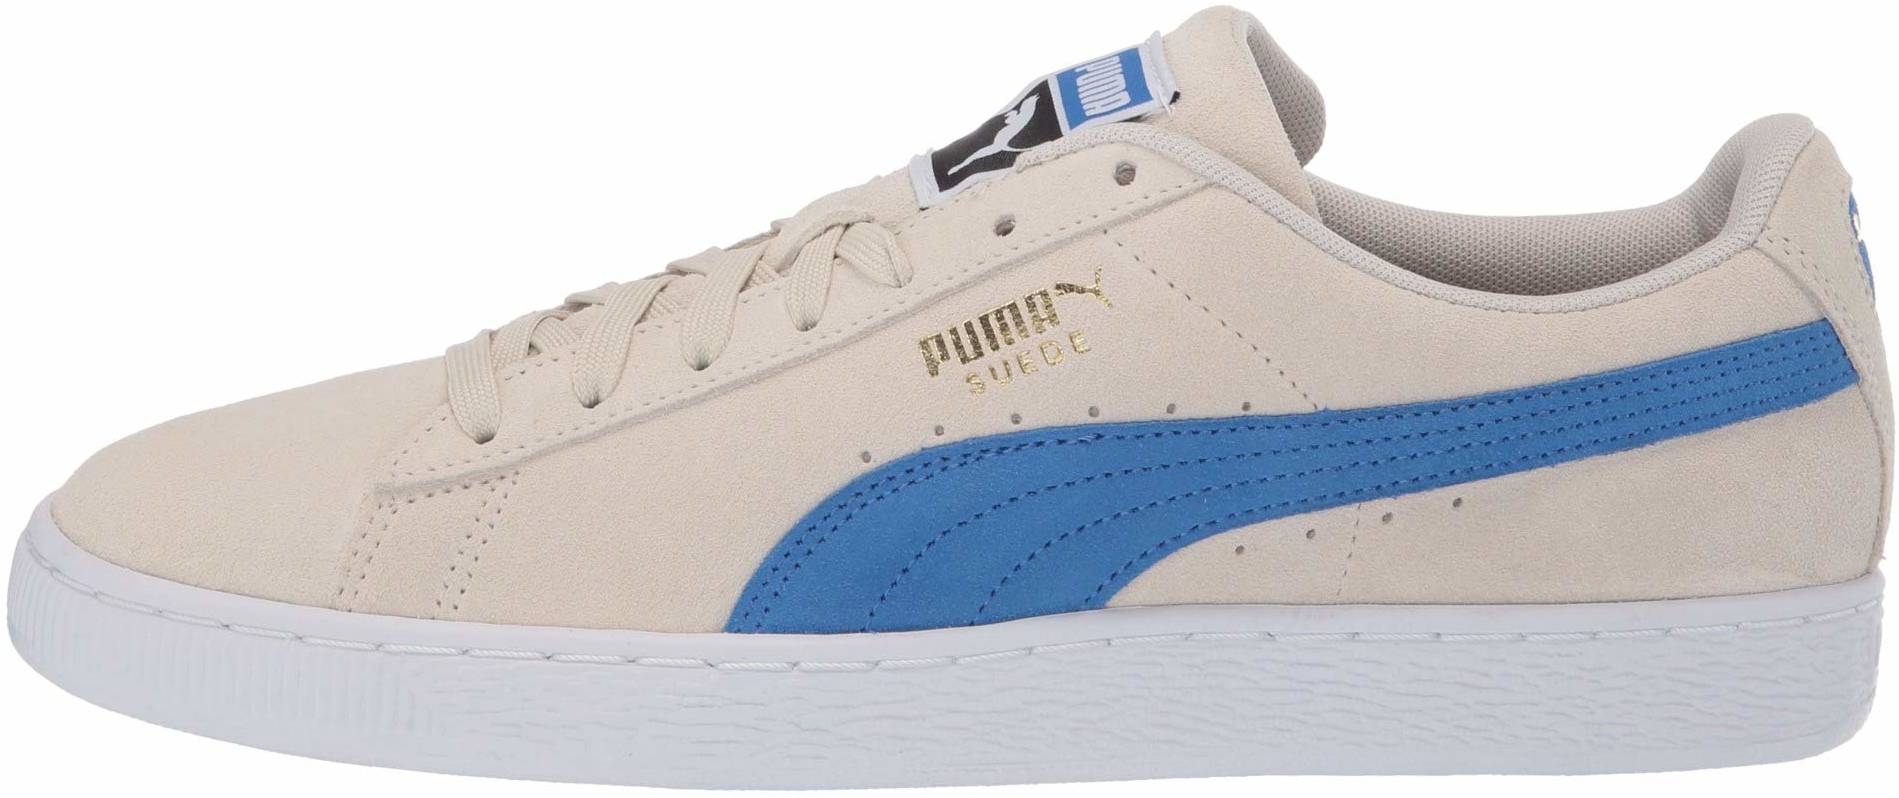 blue and white puma shoes